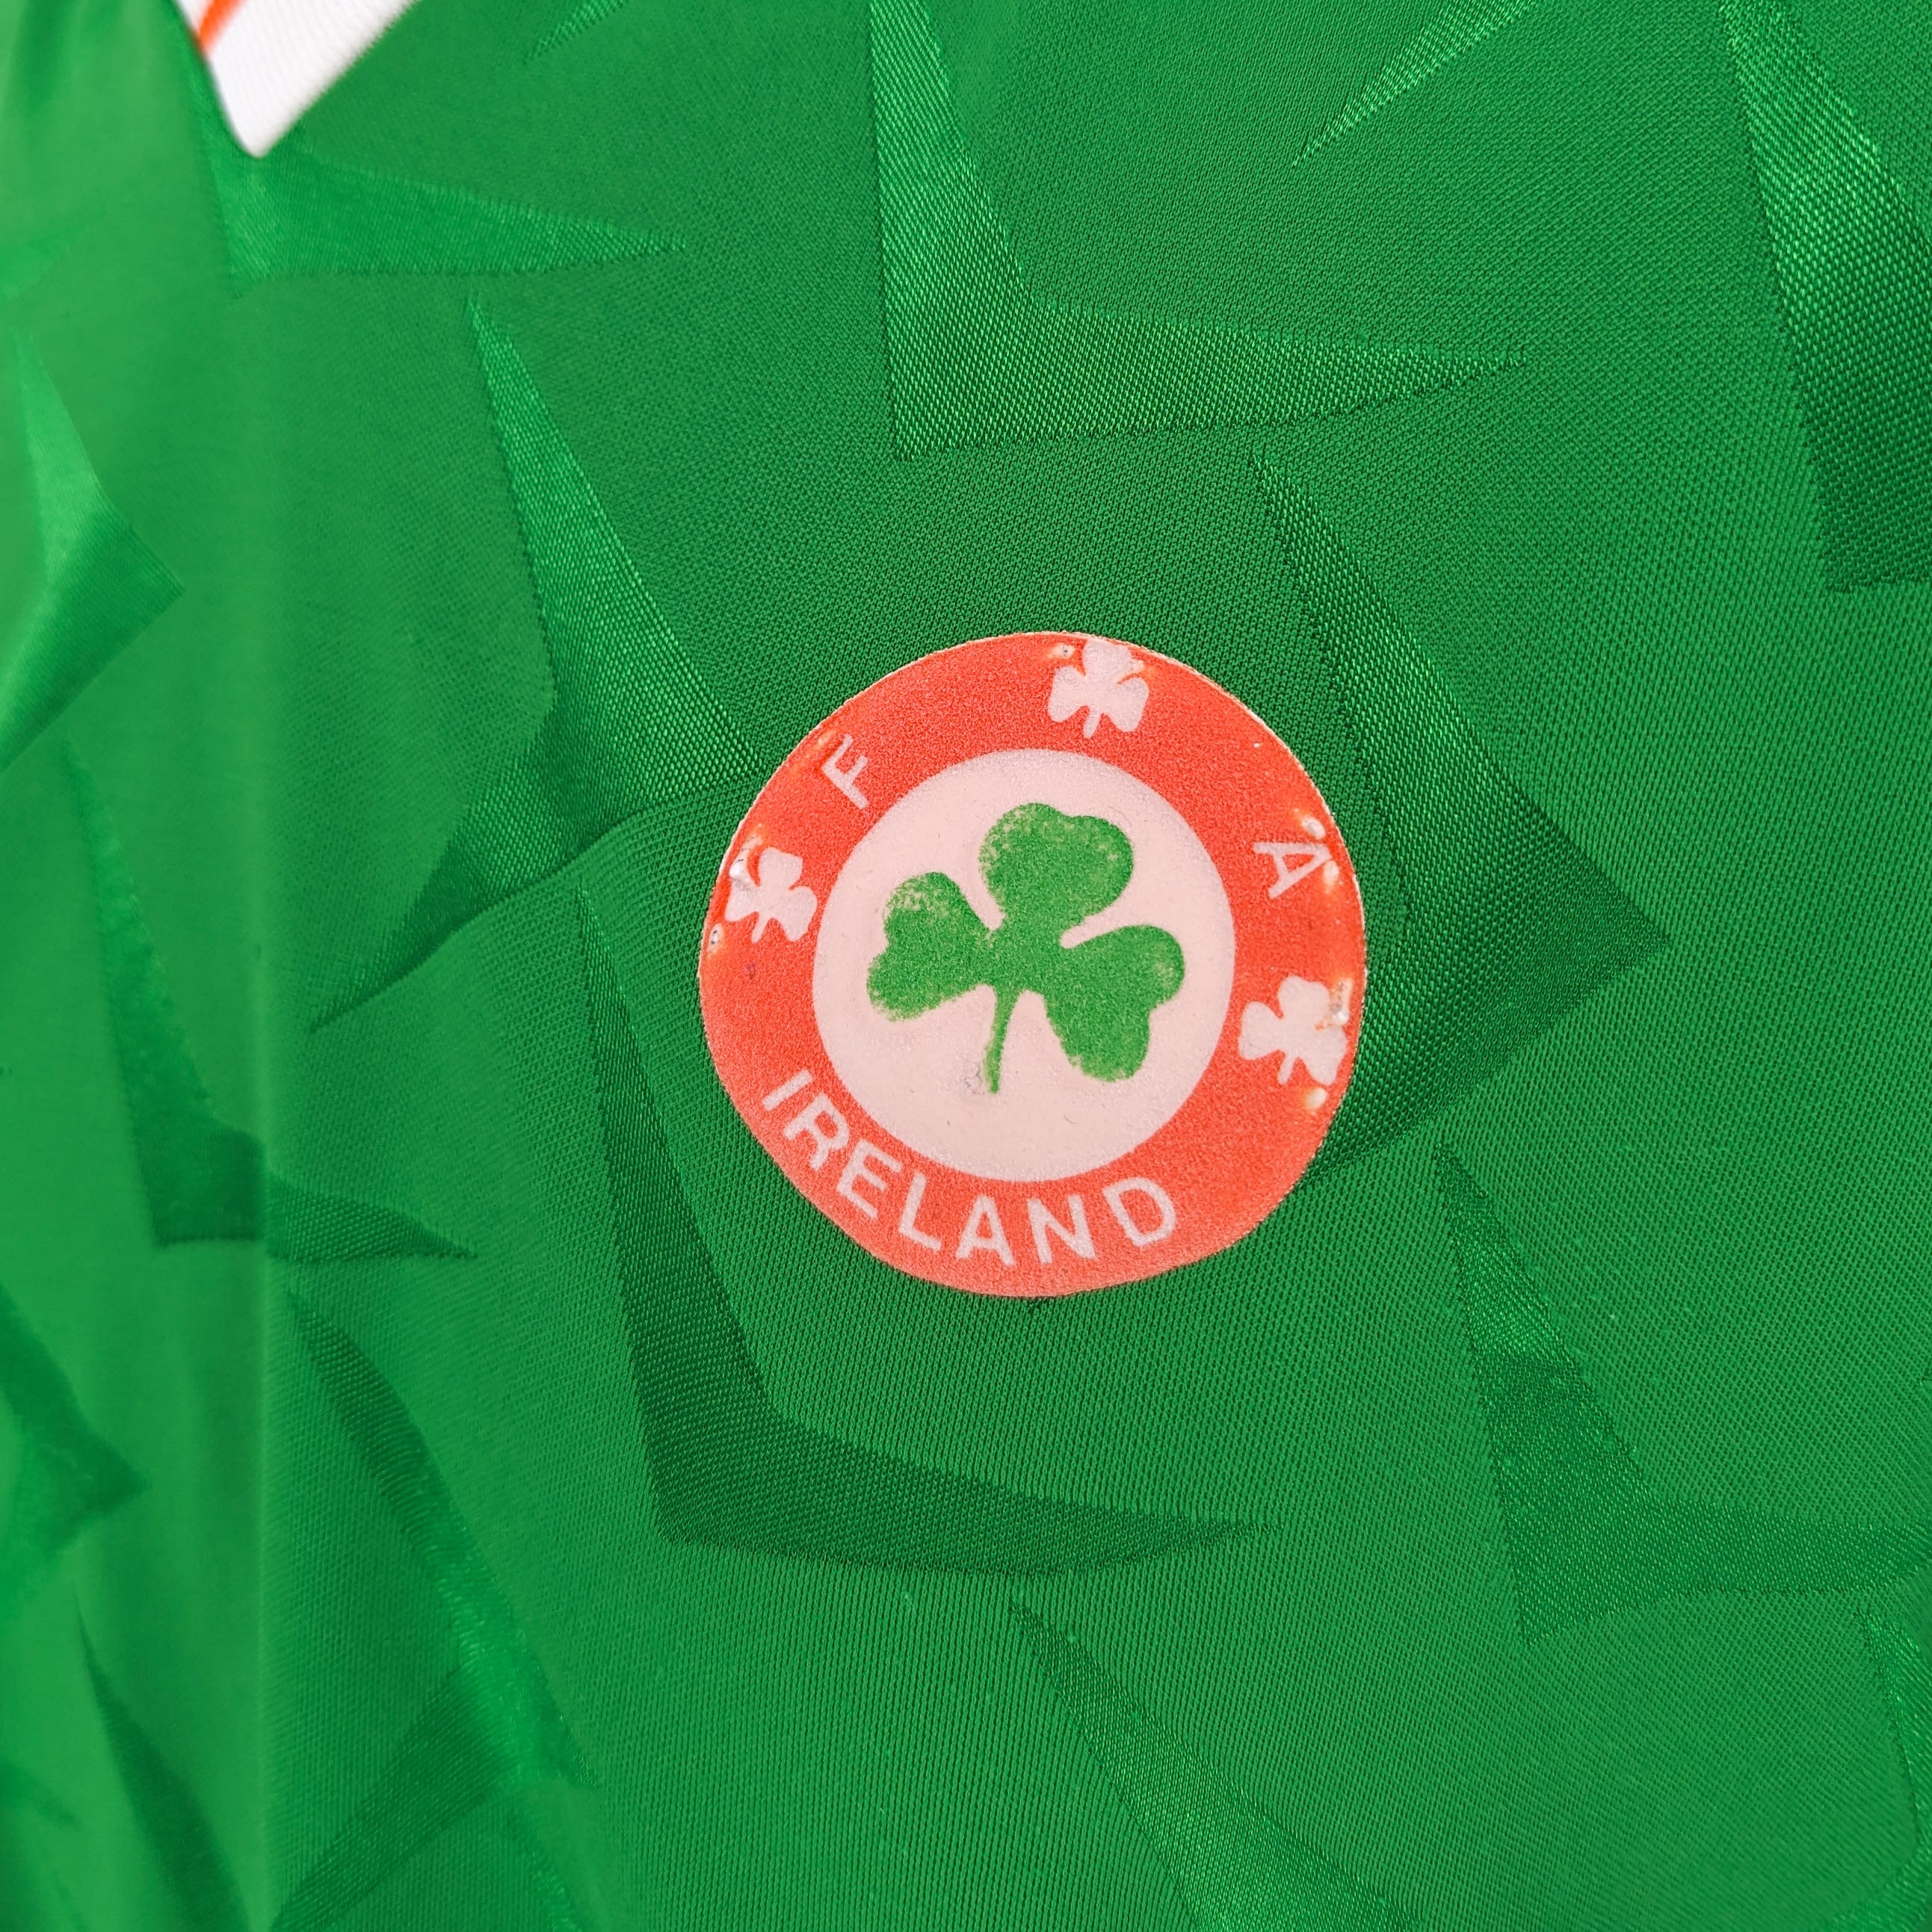 Ireland home football shirt 1990/92